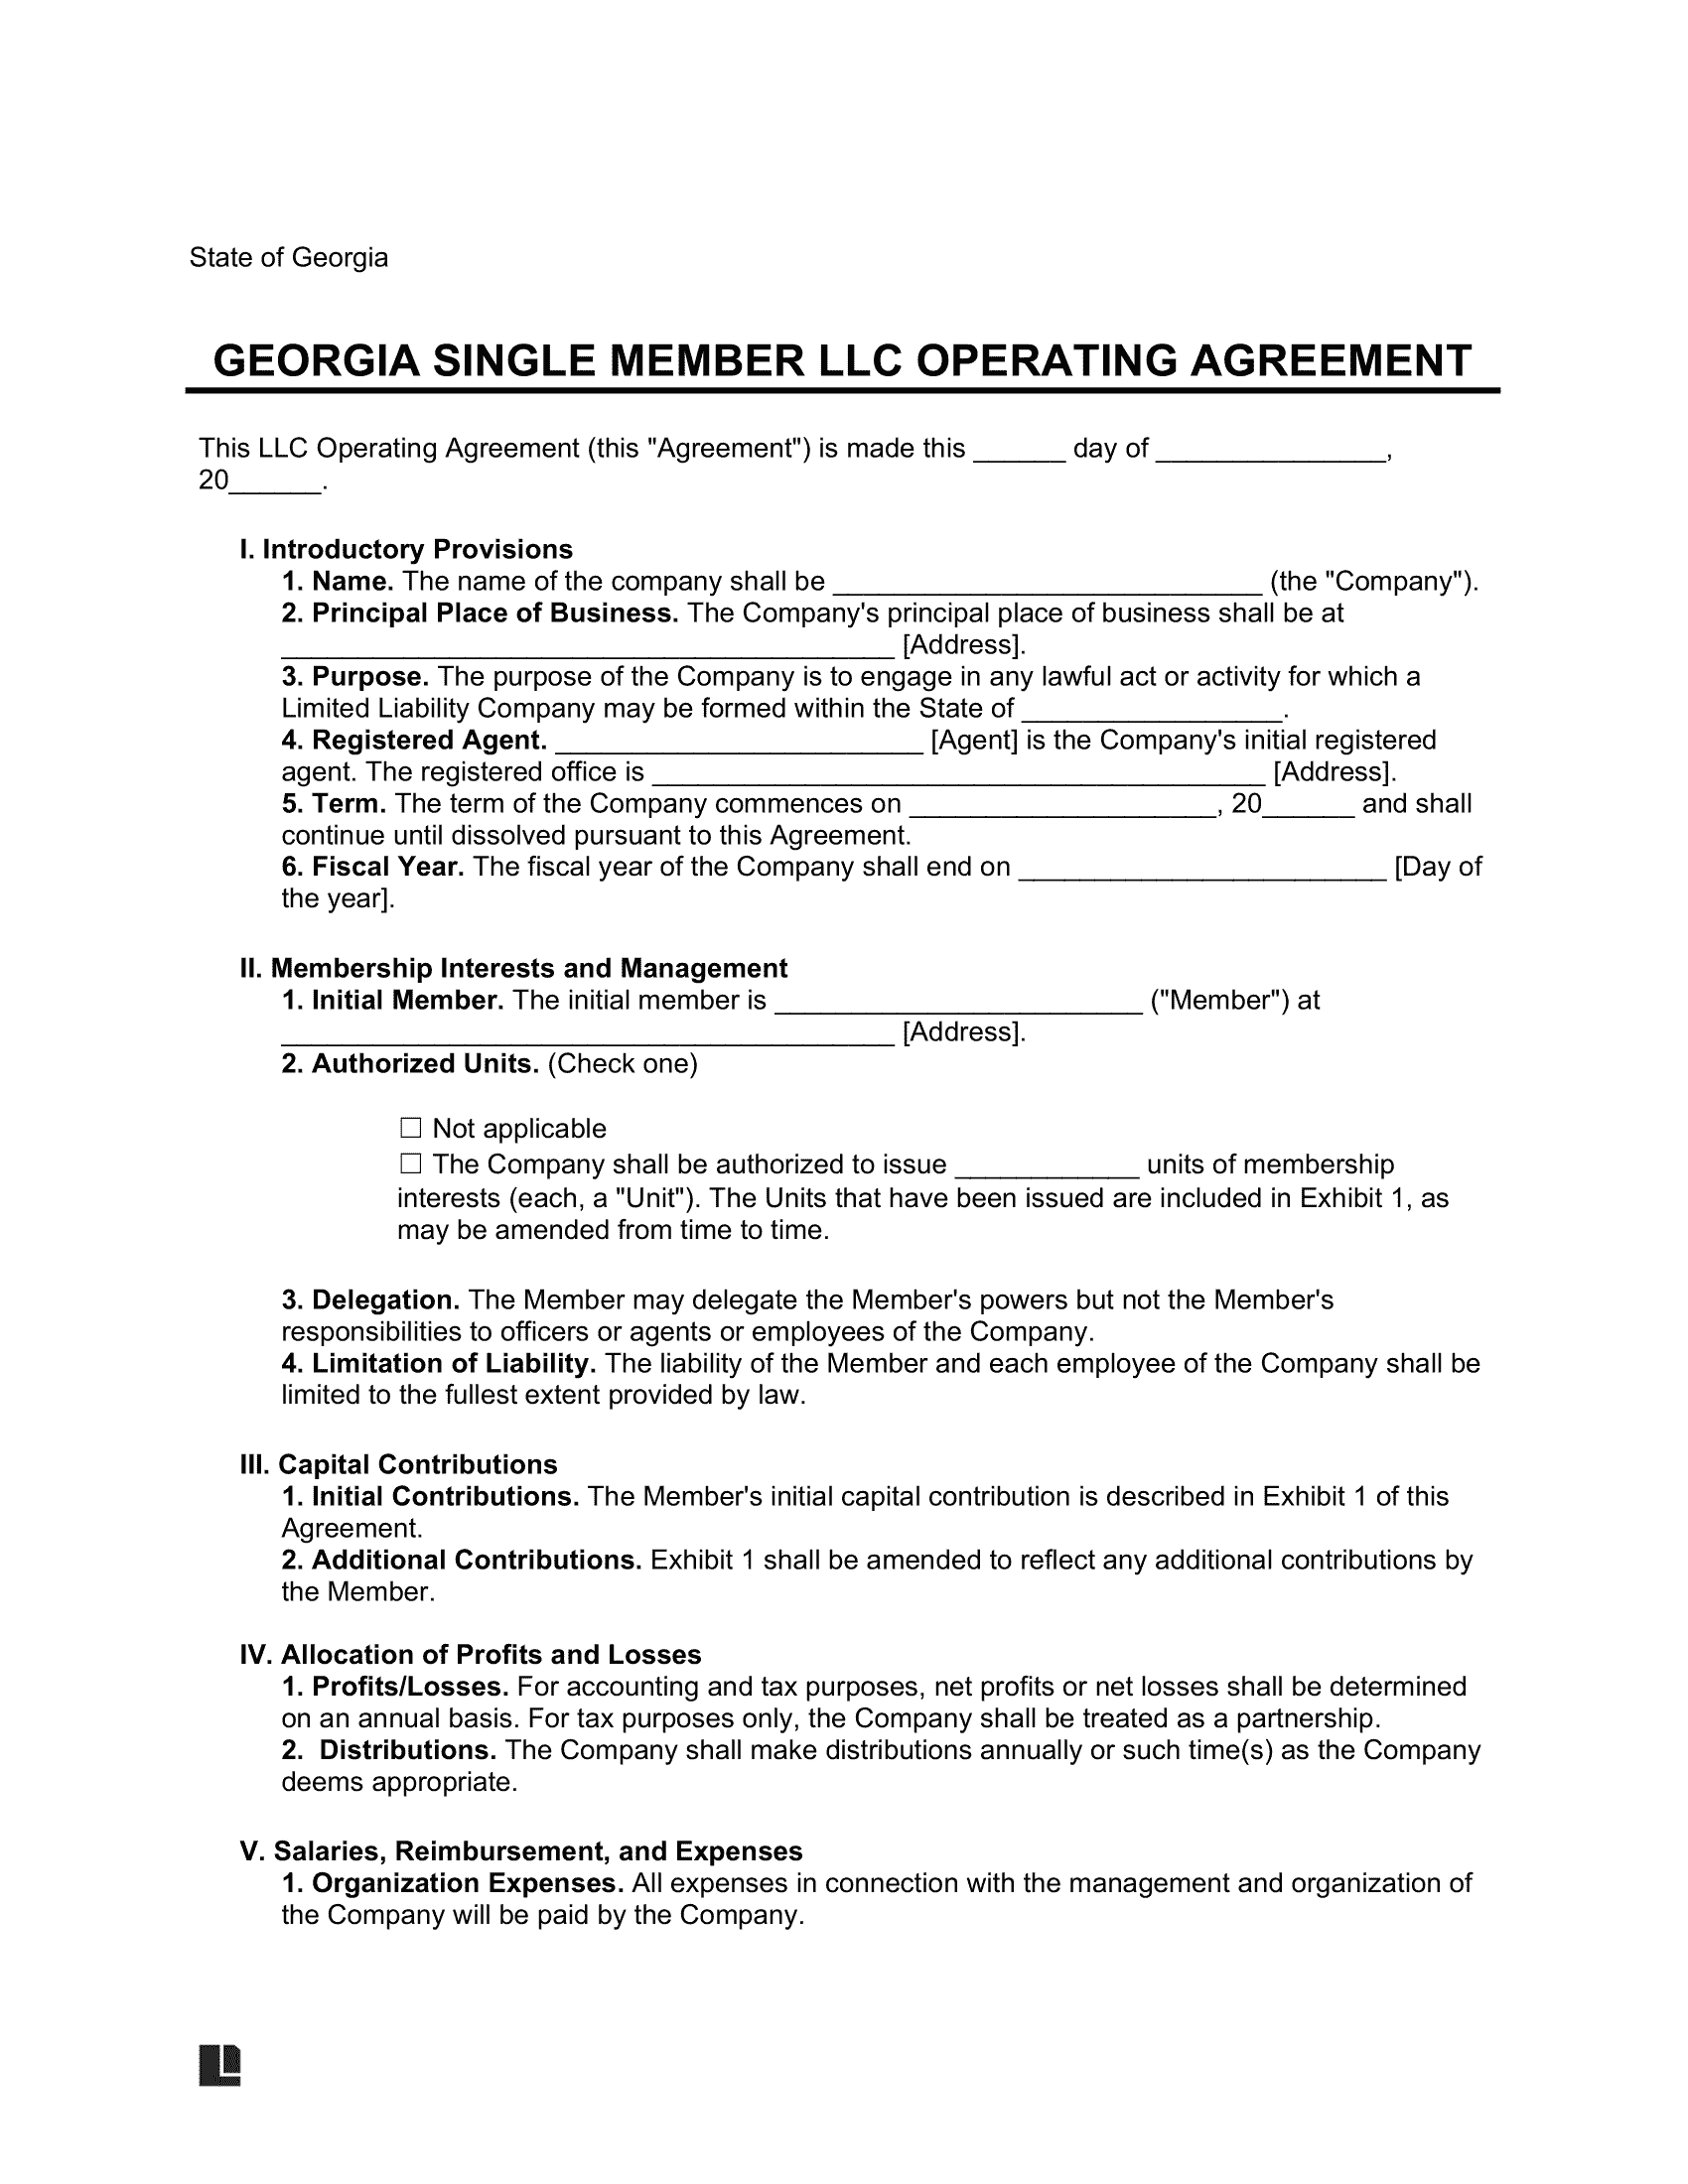 Georgia Single Member LLC Operating Agreement Form